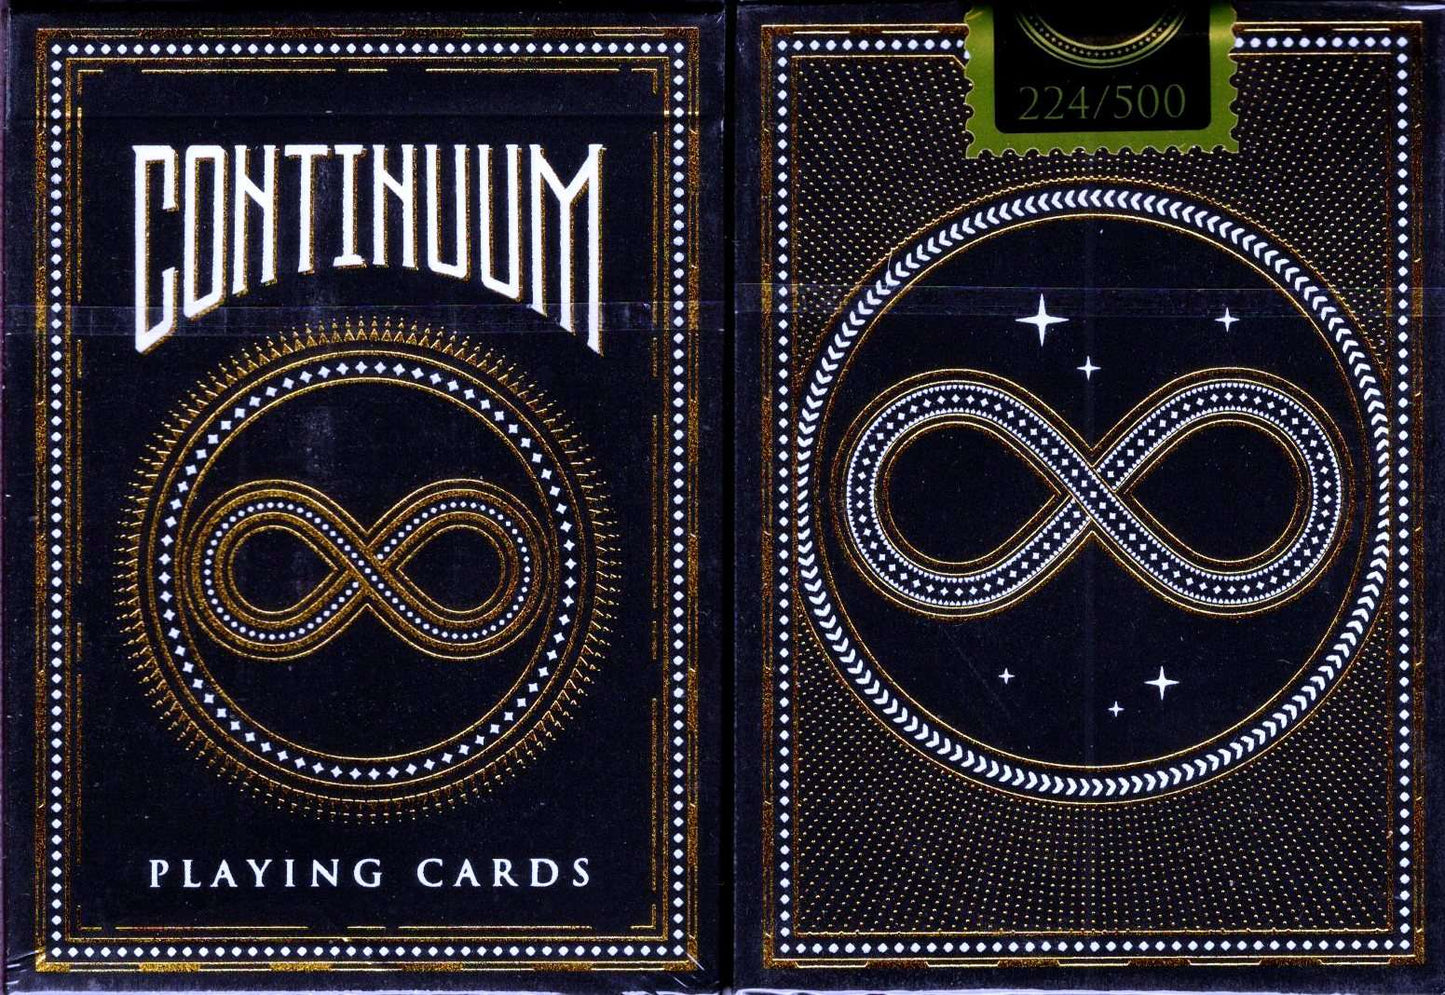 PlayingCardDecks.com-Continuum Black Playing Cards